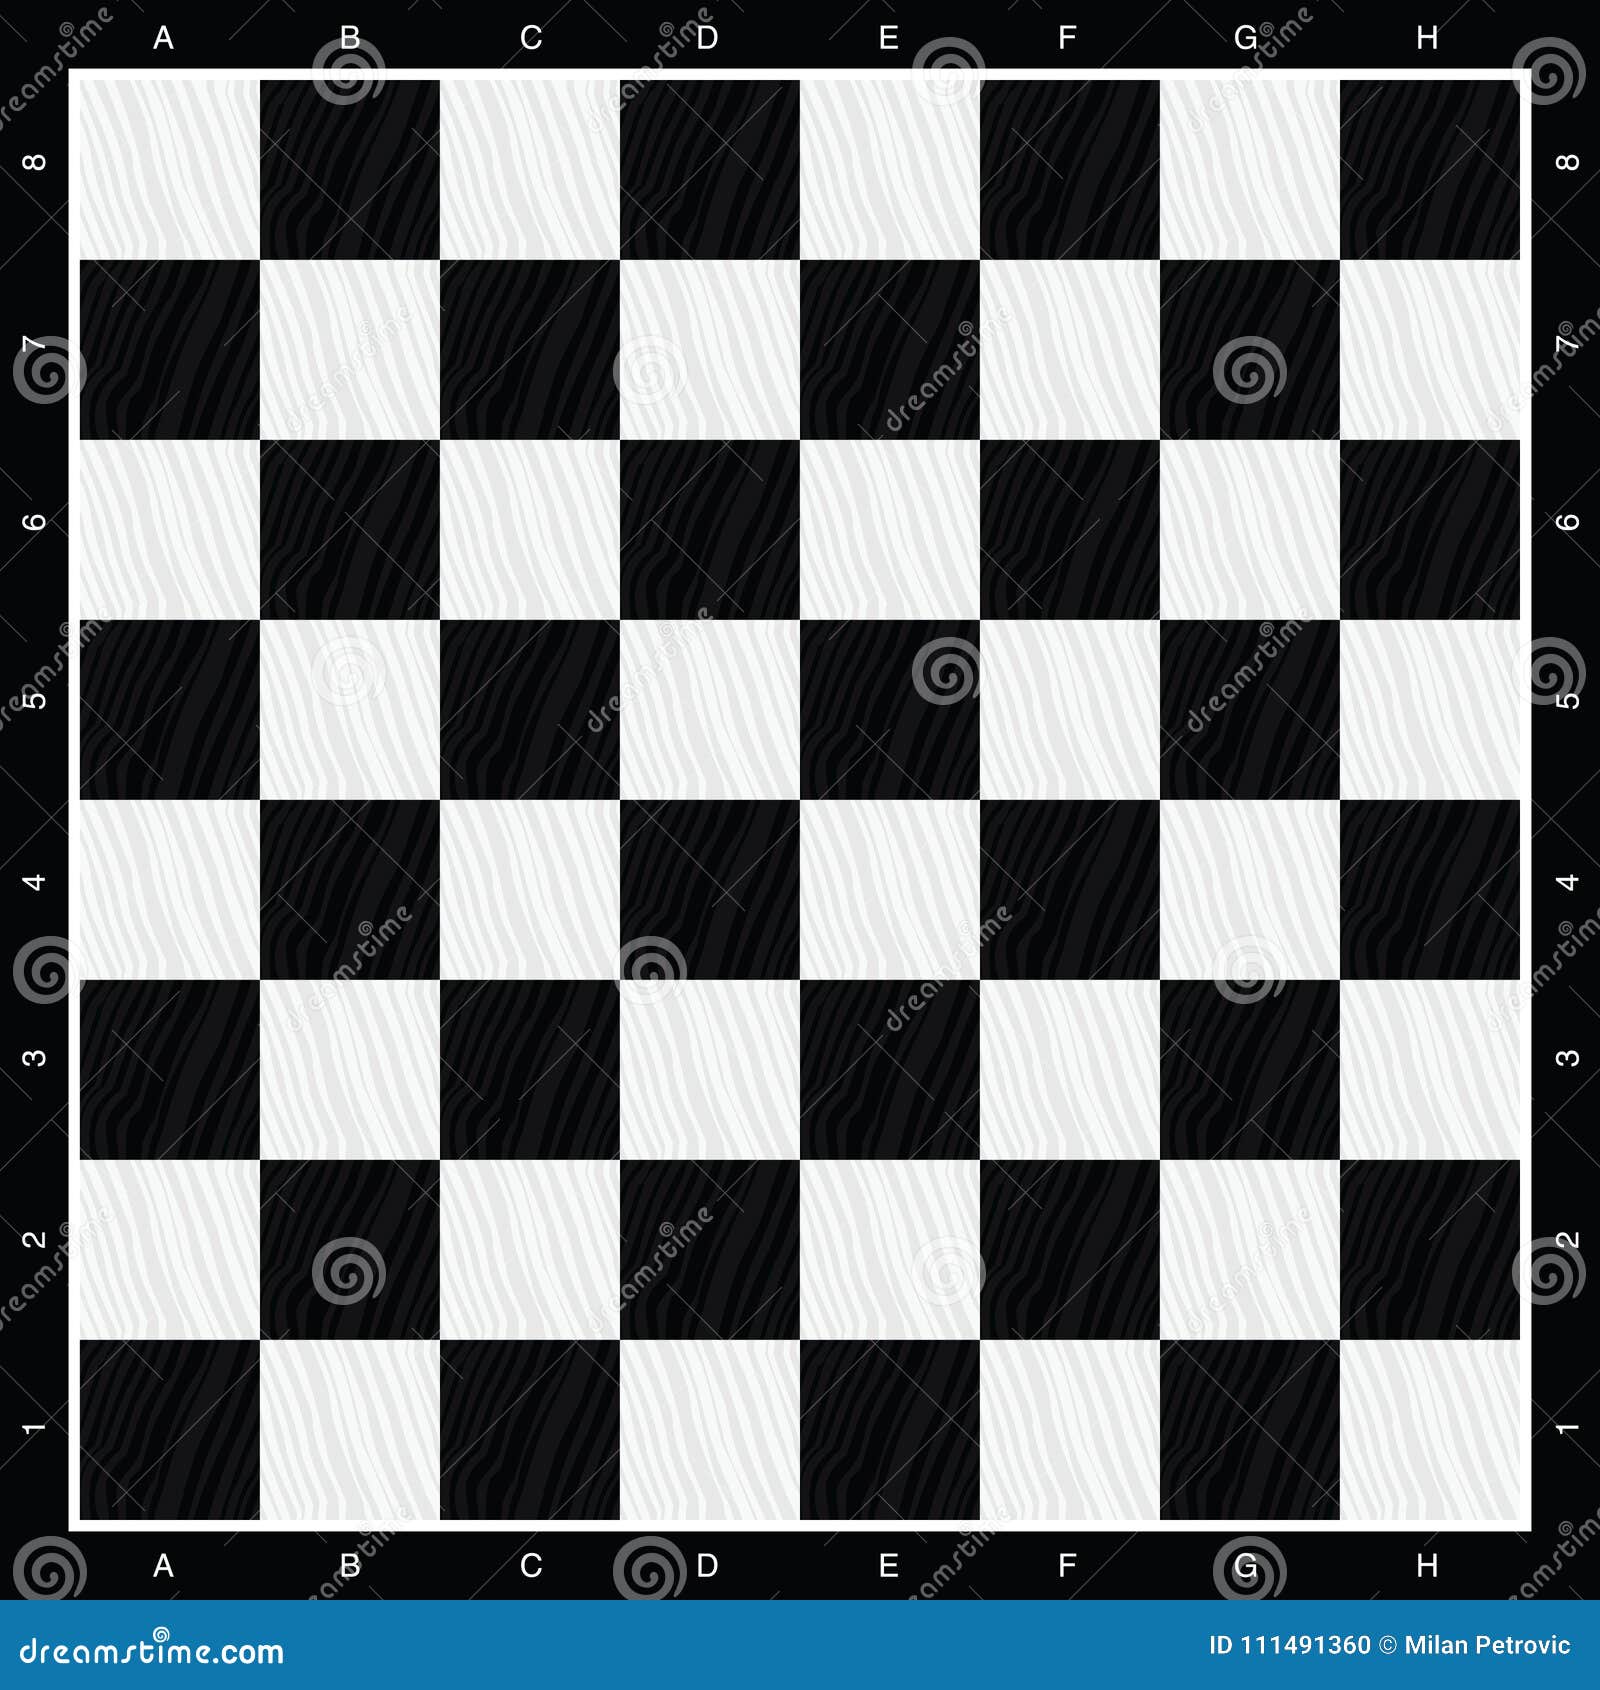 Квадробика черно белая. Шахматная доска. Шахматы поле. Шахматная доска черно белая. Шахматное поле для печати.